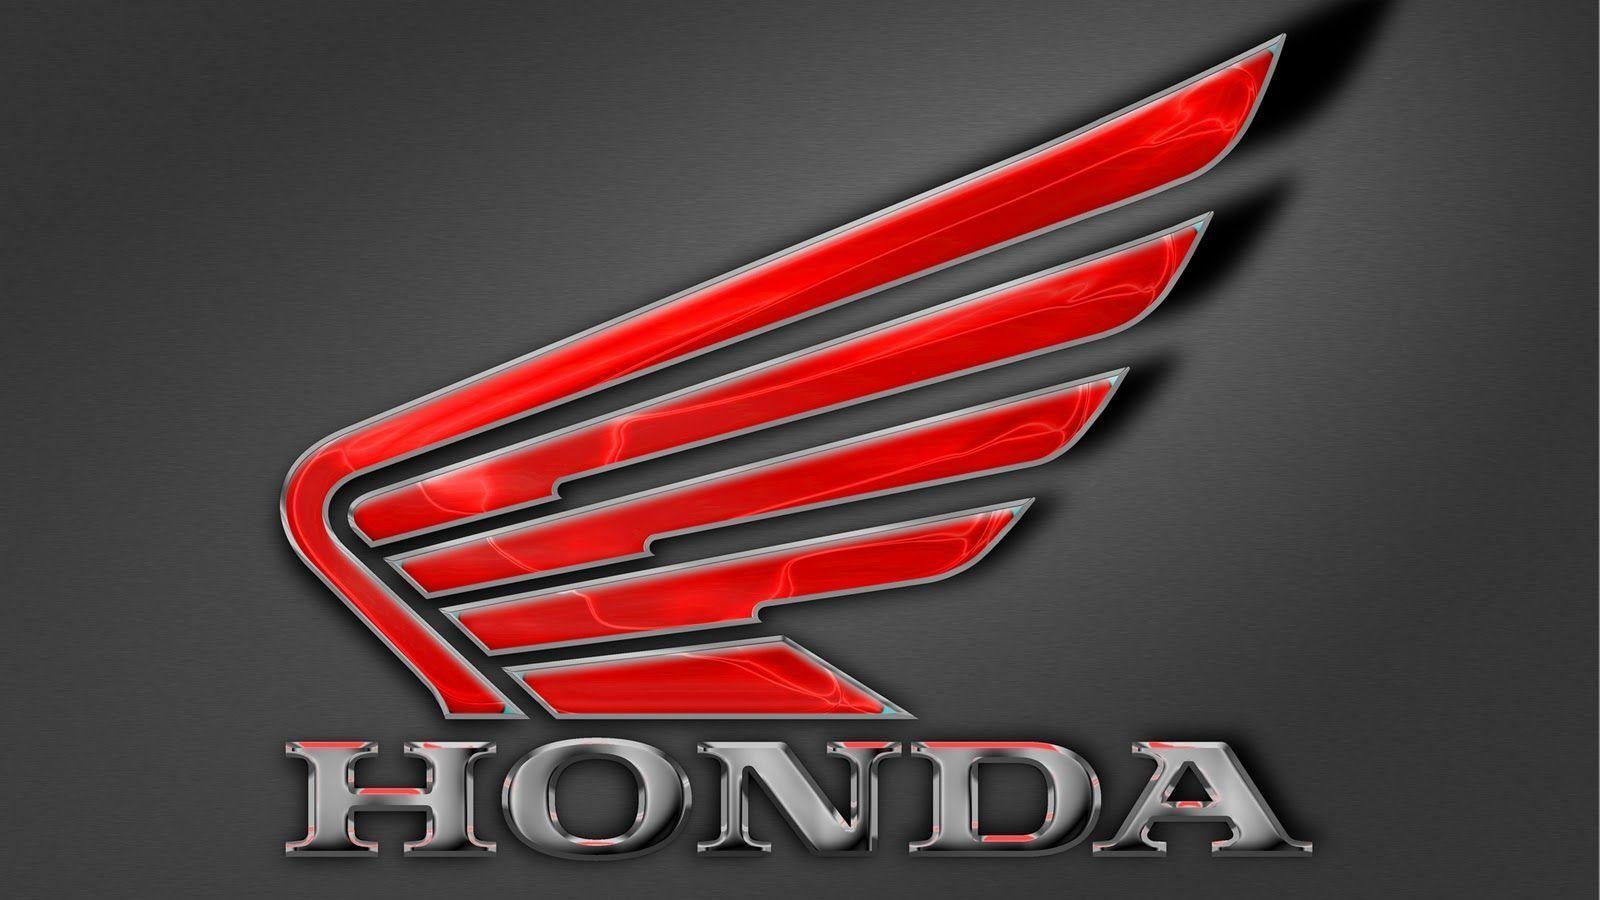 Honda motorcycle logo wallpapers